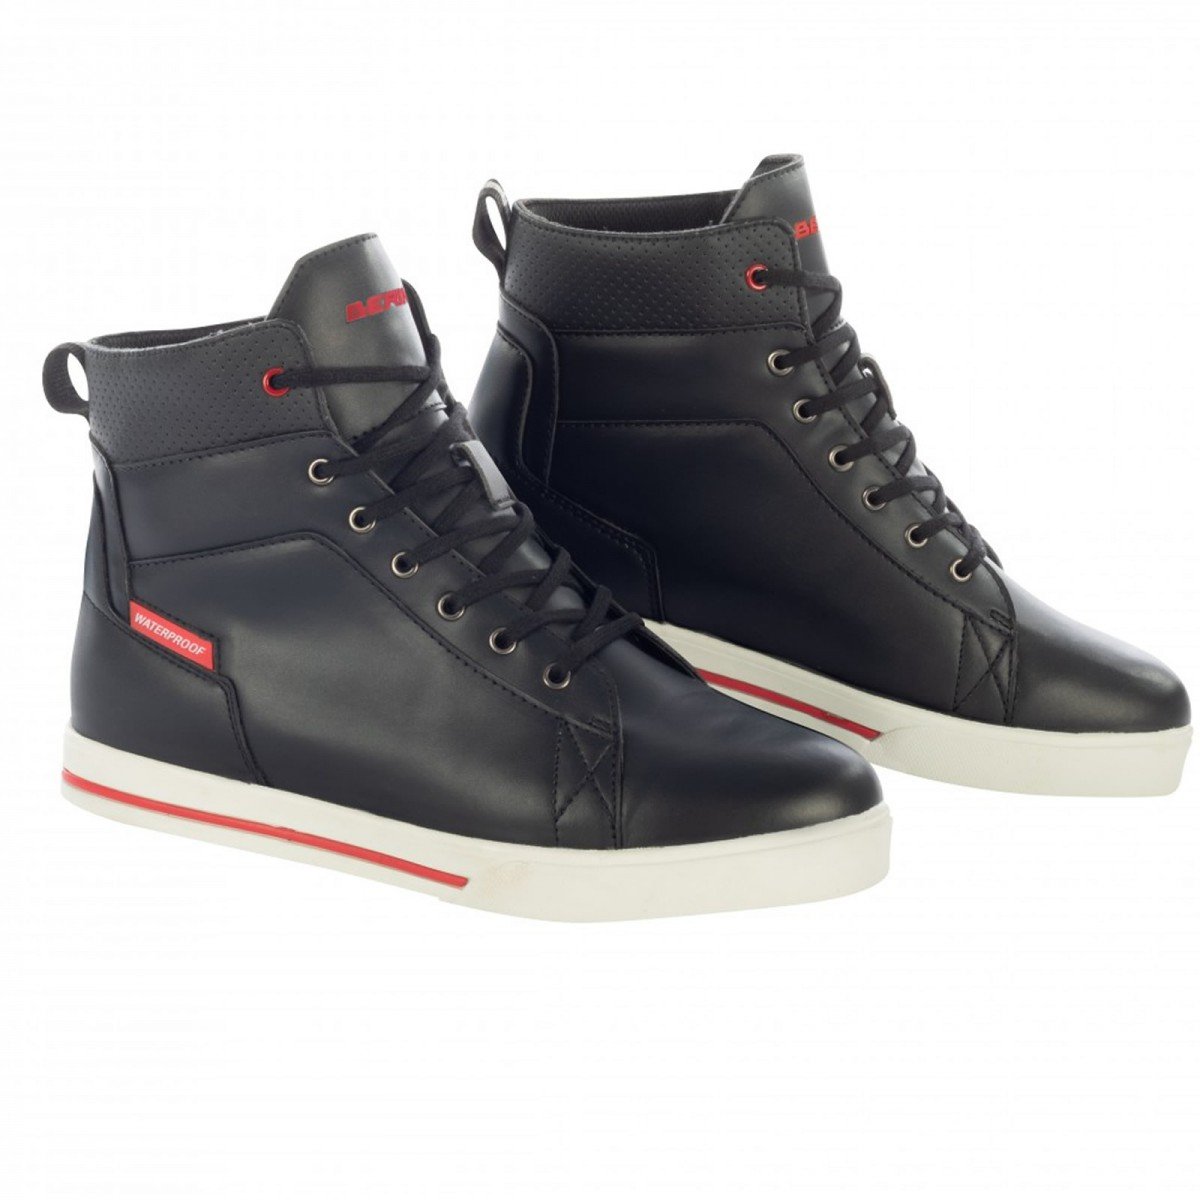 Image of Bering Sneakers Indy Black Red Size 44 EN